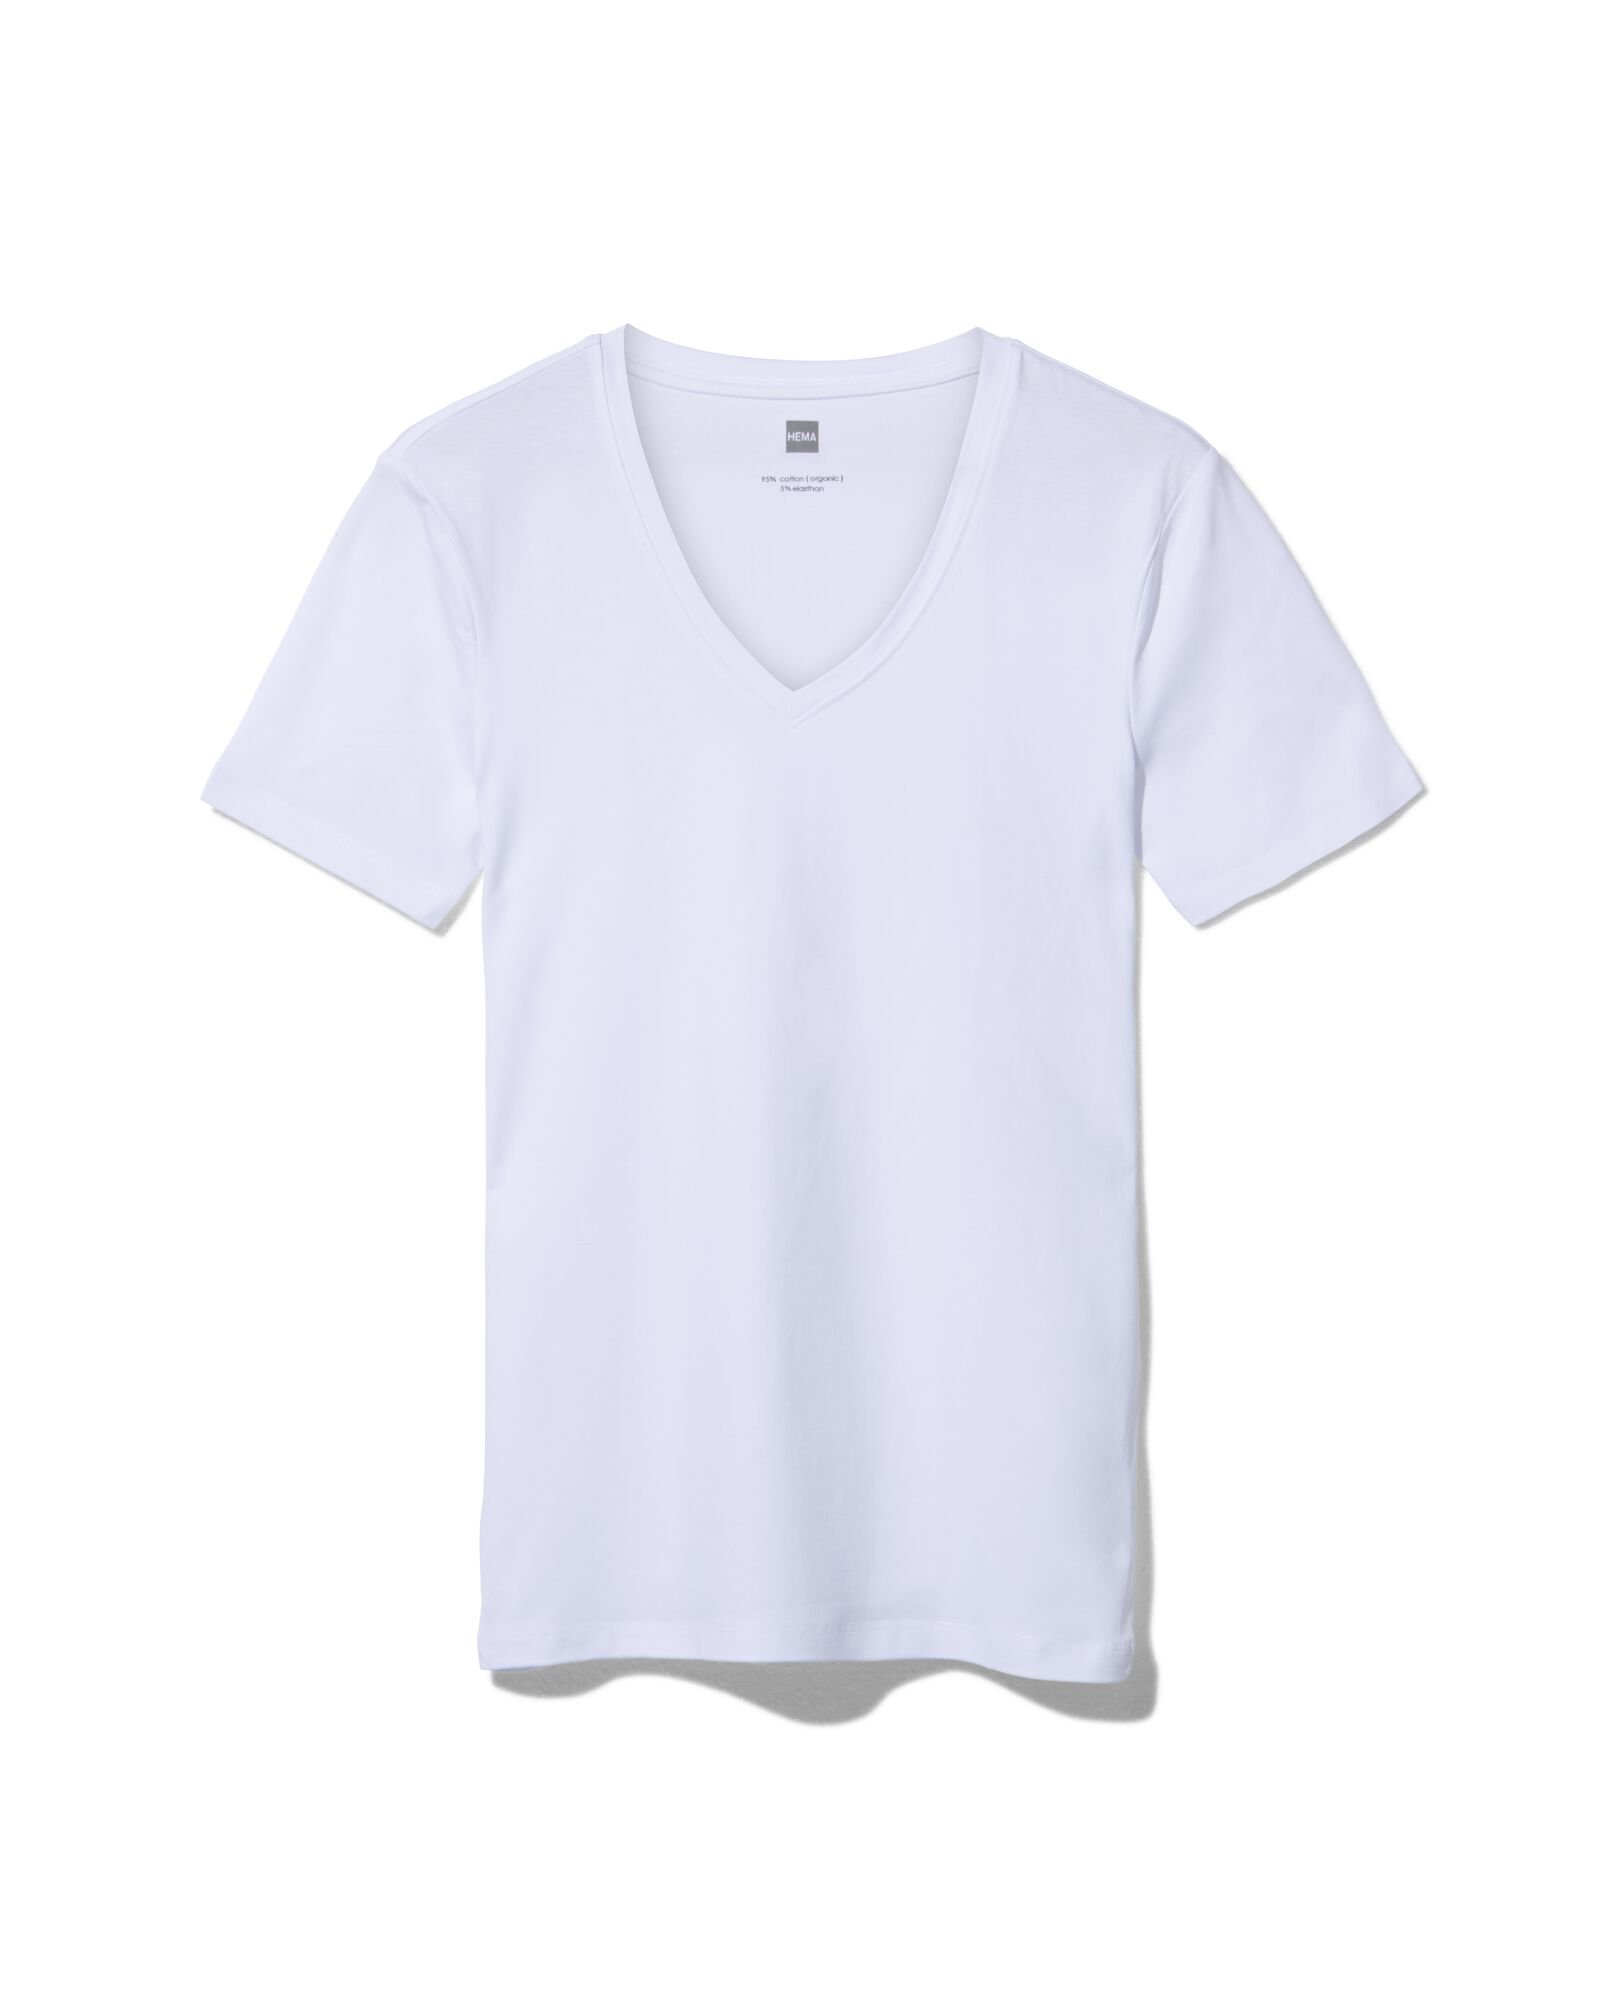 HEMA T-shirt Homme Slim Fit Col En V Profond Blanc (blanc)